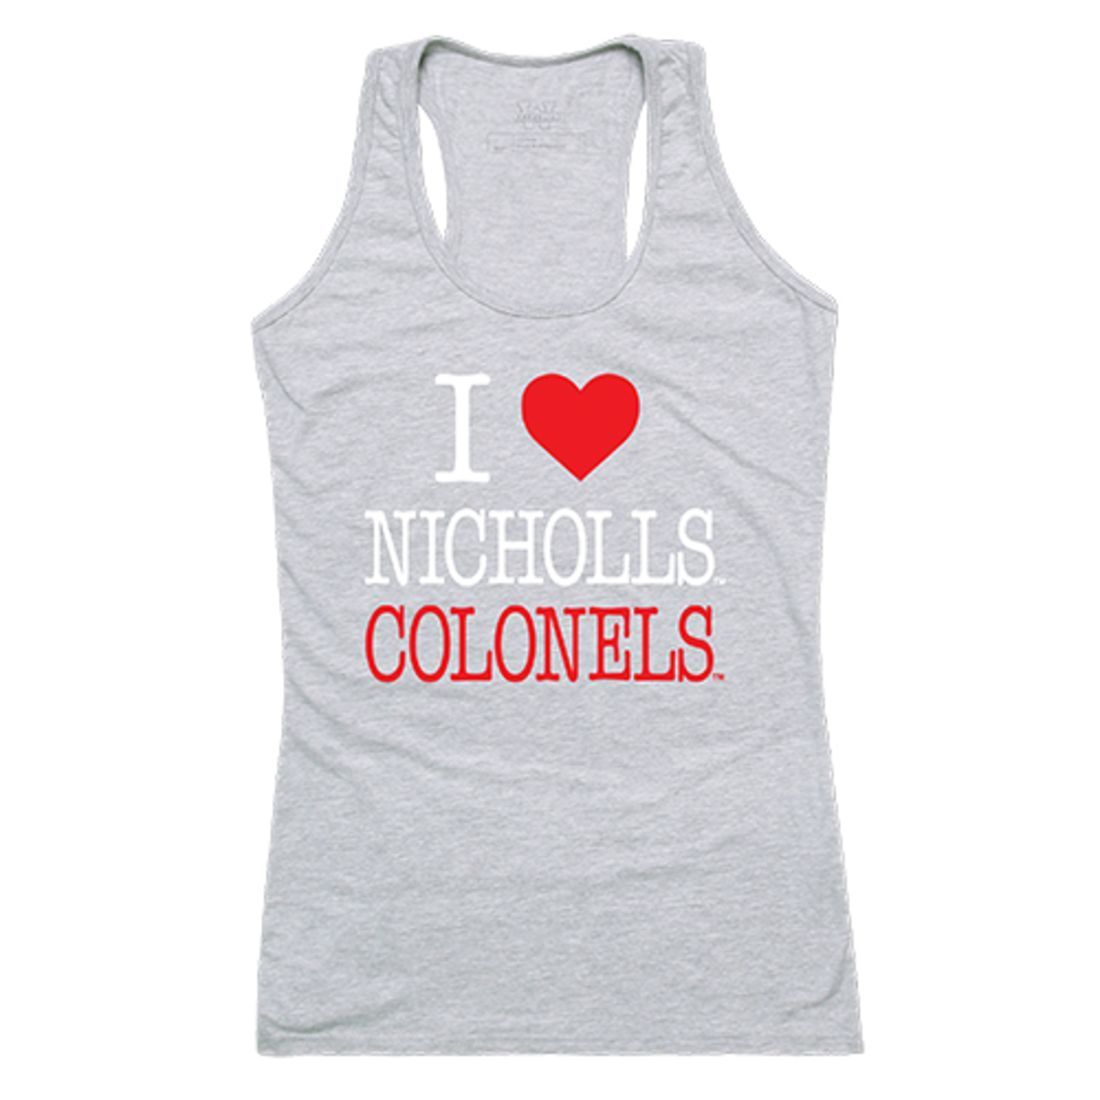 Nicholls State University Colonels Womens Love Tank Top Tee T-Shirt Heather Grey-Campus-Wardrobe